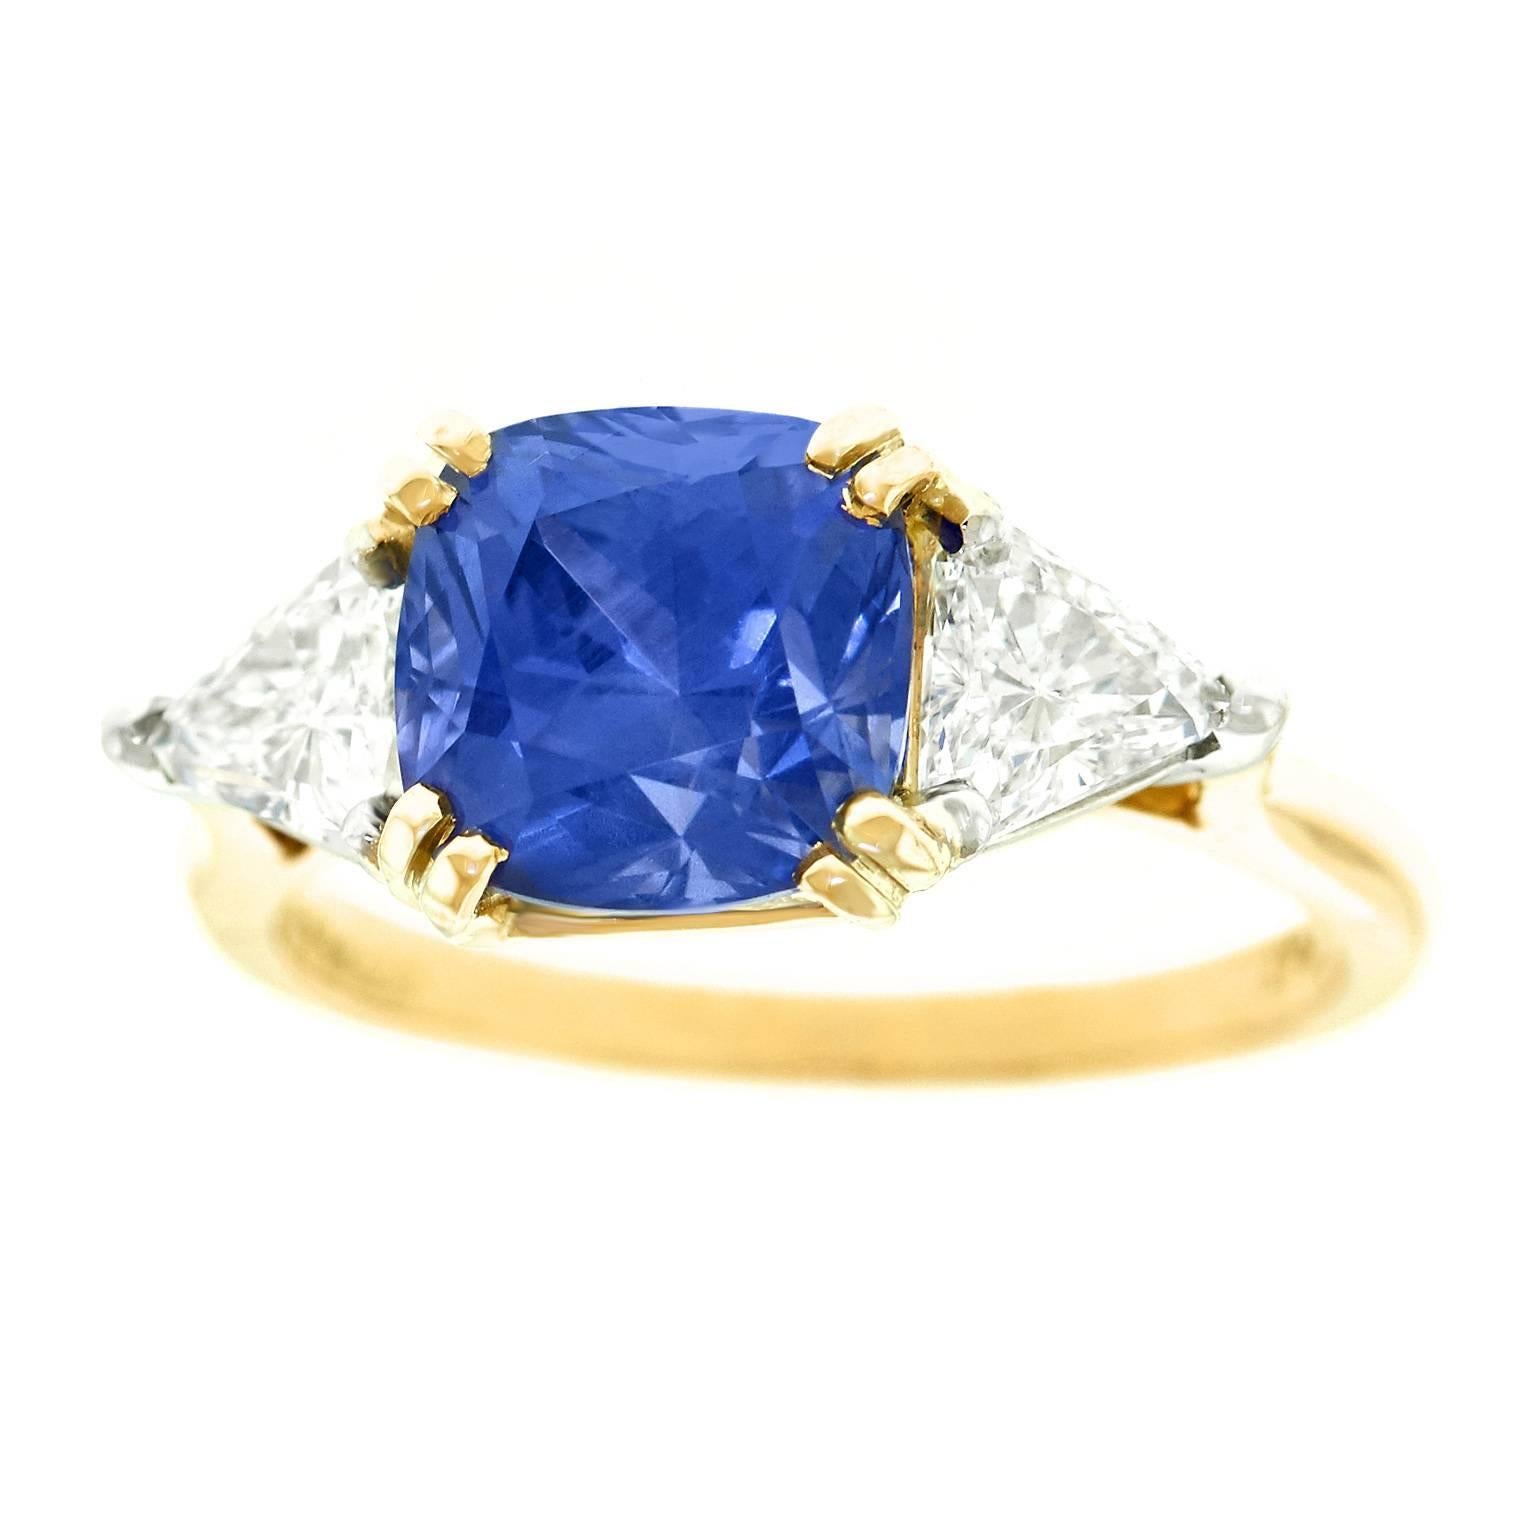 Dorfman 3.40 Carat Burma No-Heat Sapphire Diamond Ring GIA Certified